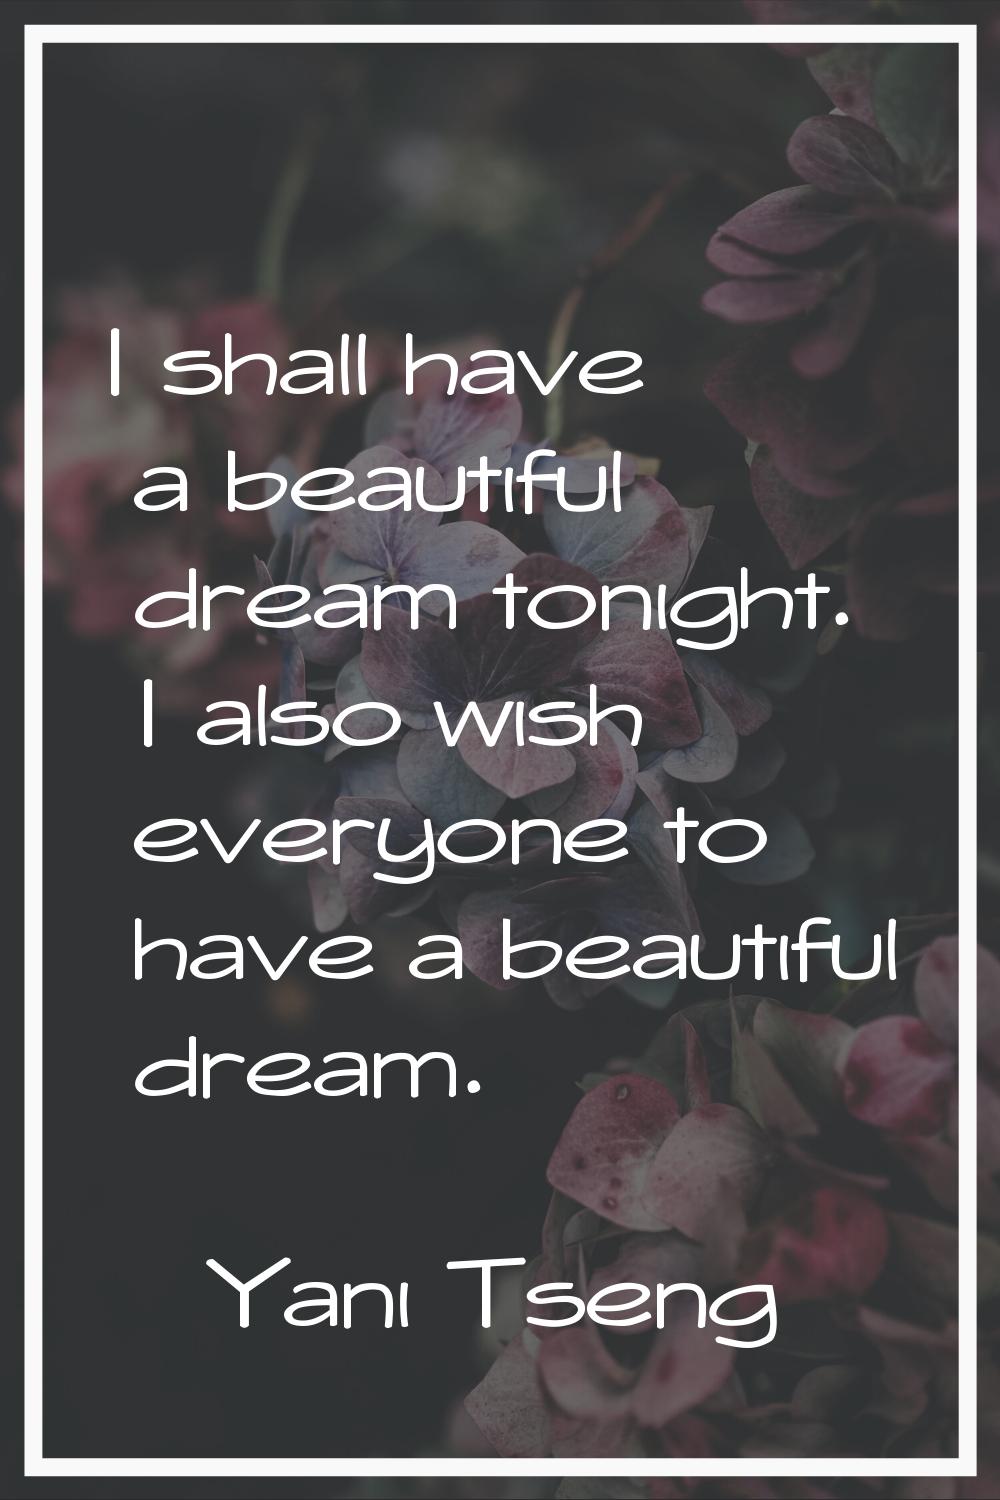 I shall have a beautiful dream tonight. I also wish everyone to have a beautiful dream.